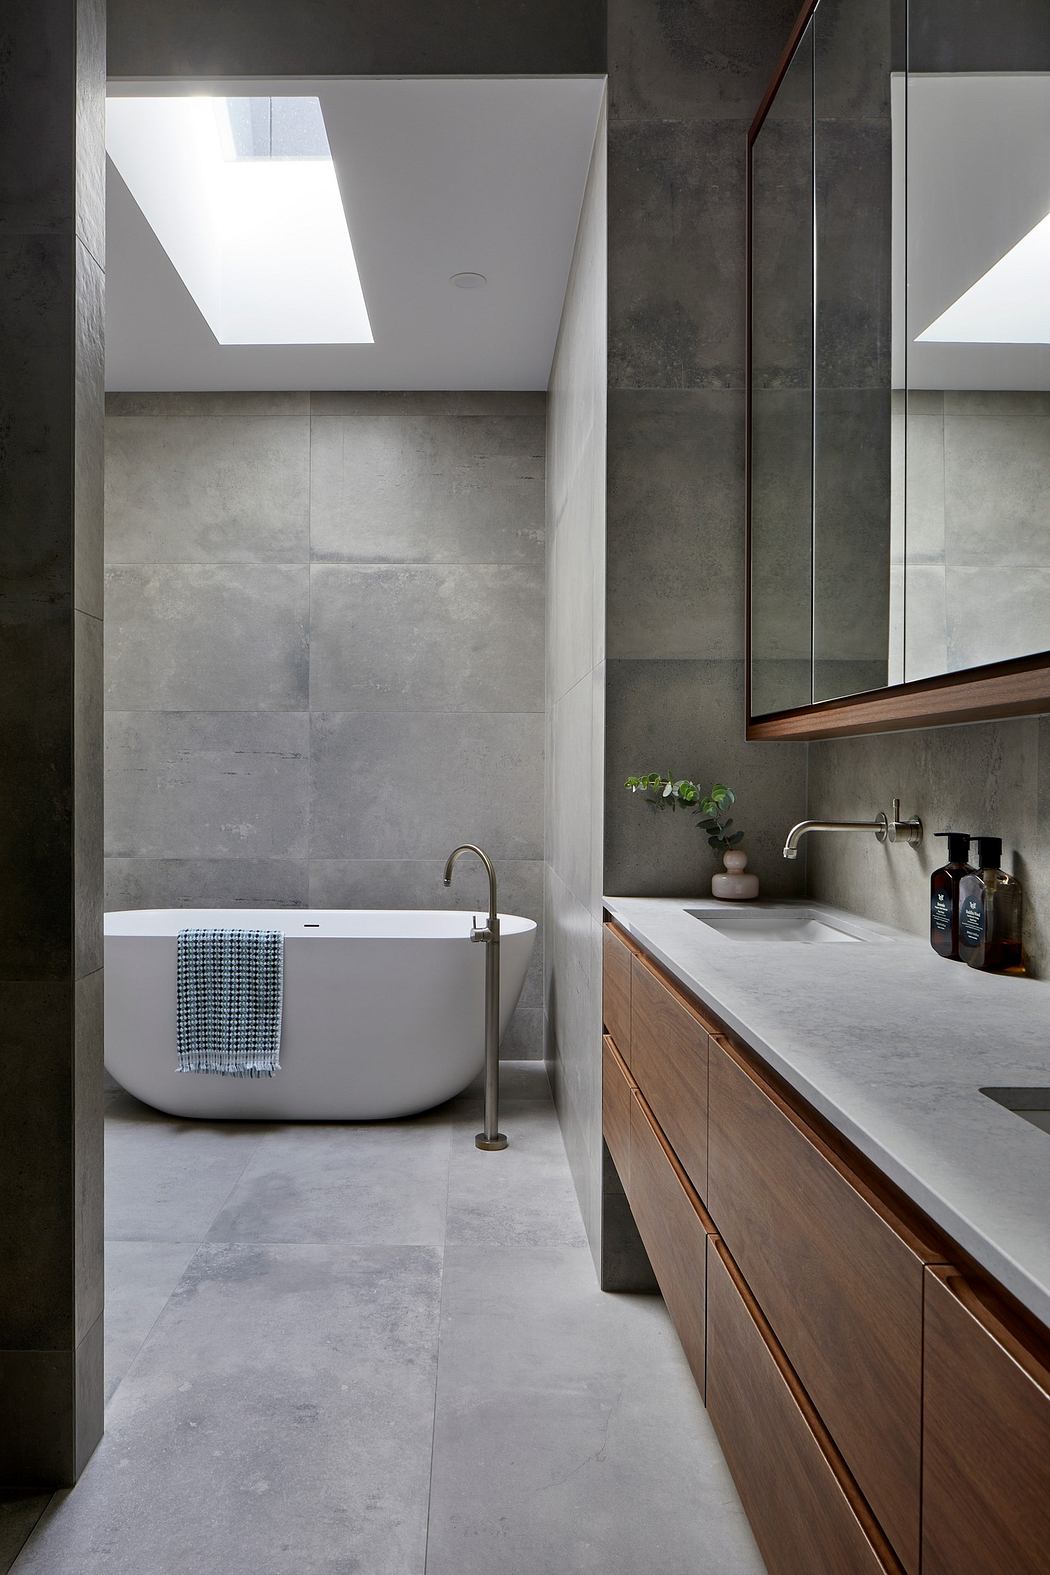 Modern bathroom with a freestanding tub, skylight, and minimalist vanity